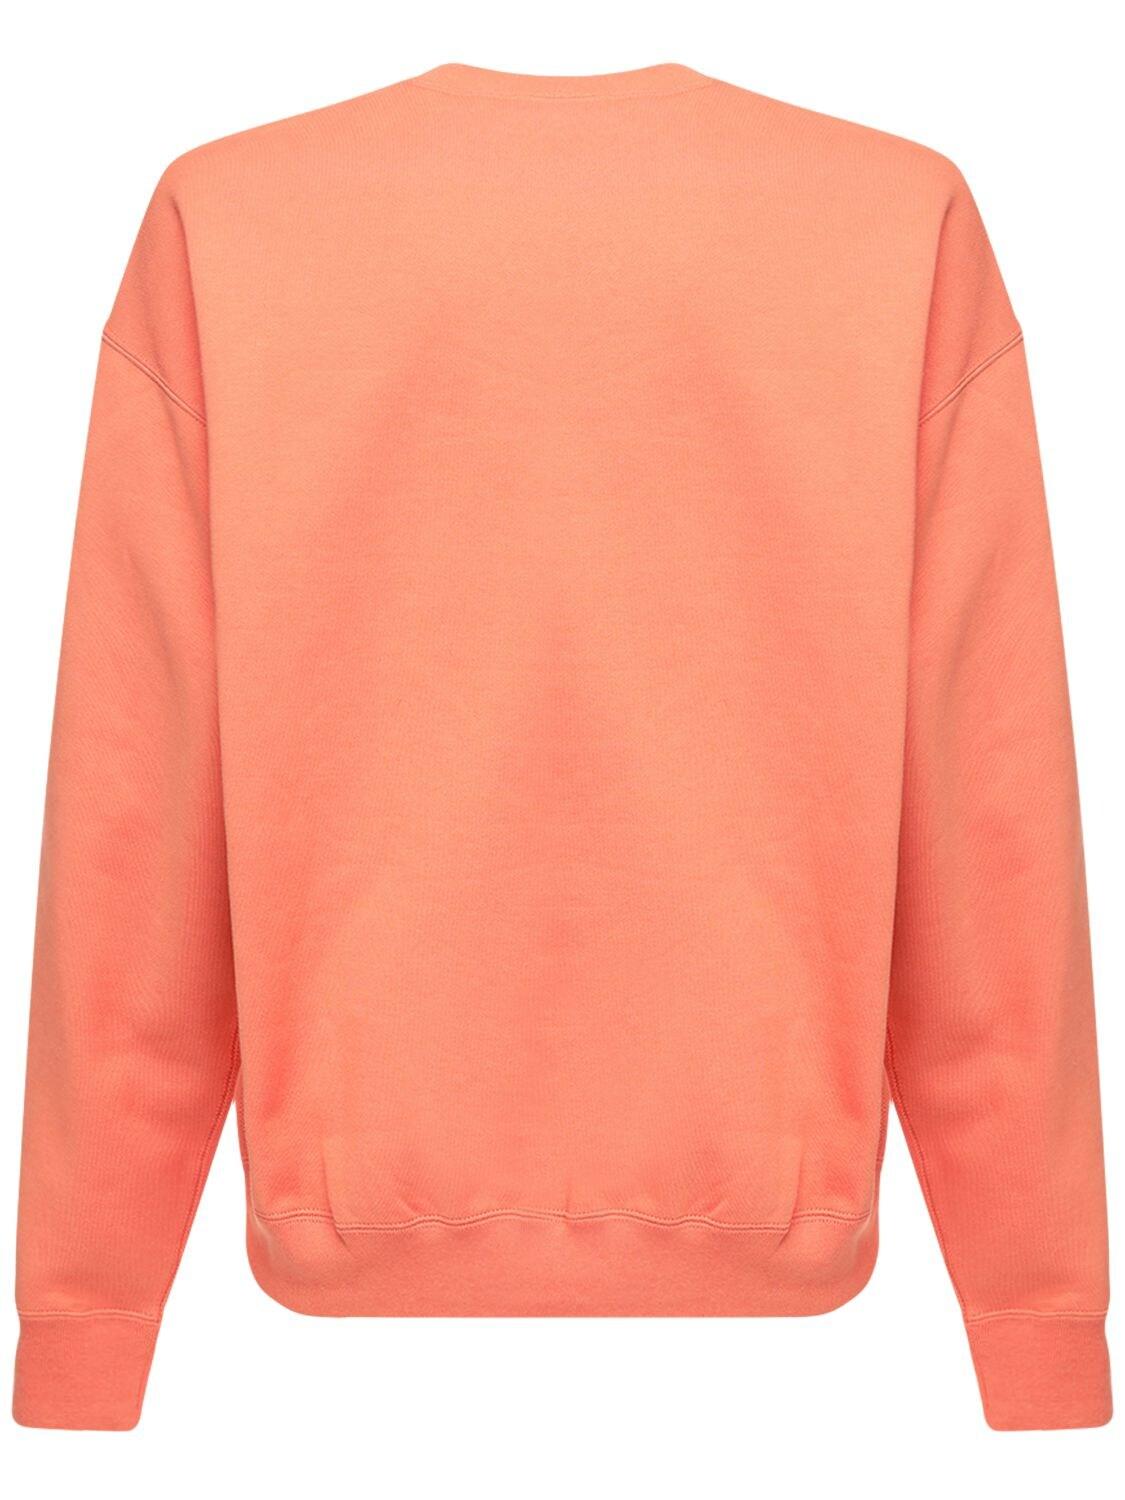 Nike Lab Fleece Crewneck Sweatshirt in Orange for Men - Lyst